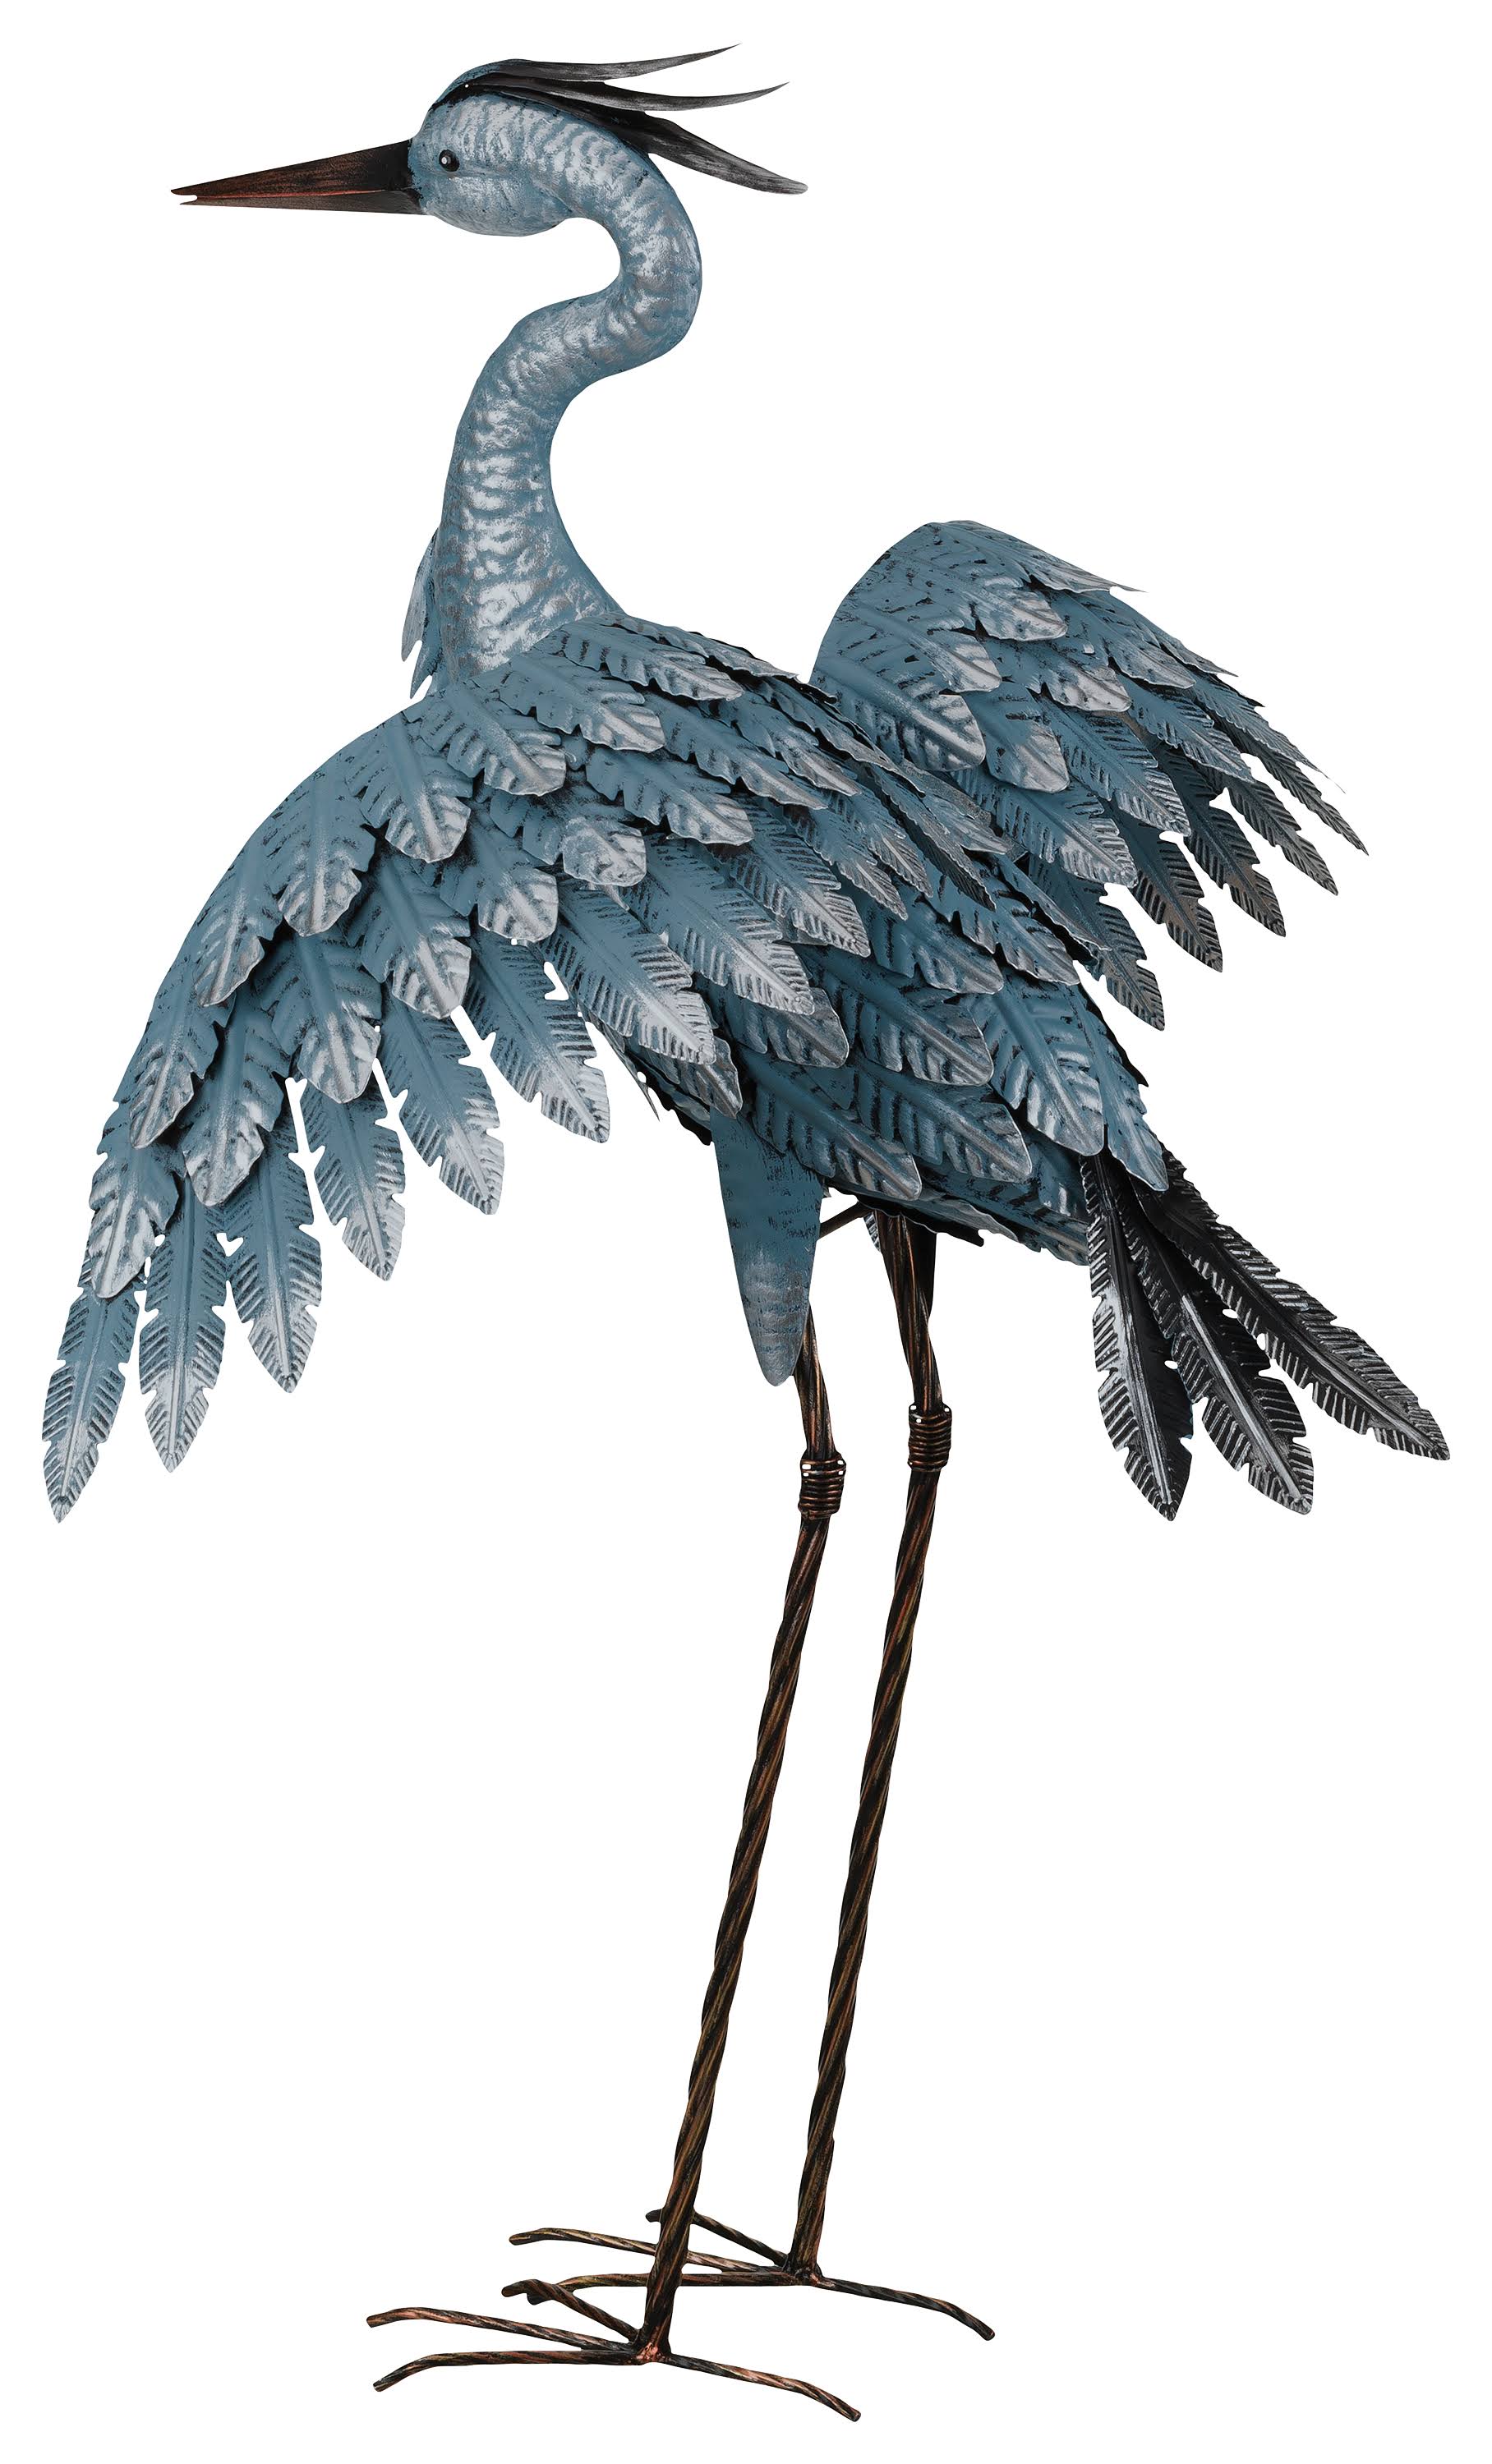 Regal Art & Gift 27 in. Metallic Blue Heron - Wings Out